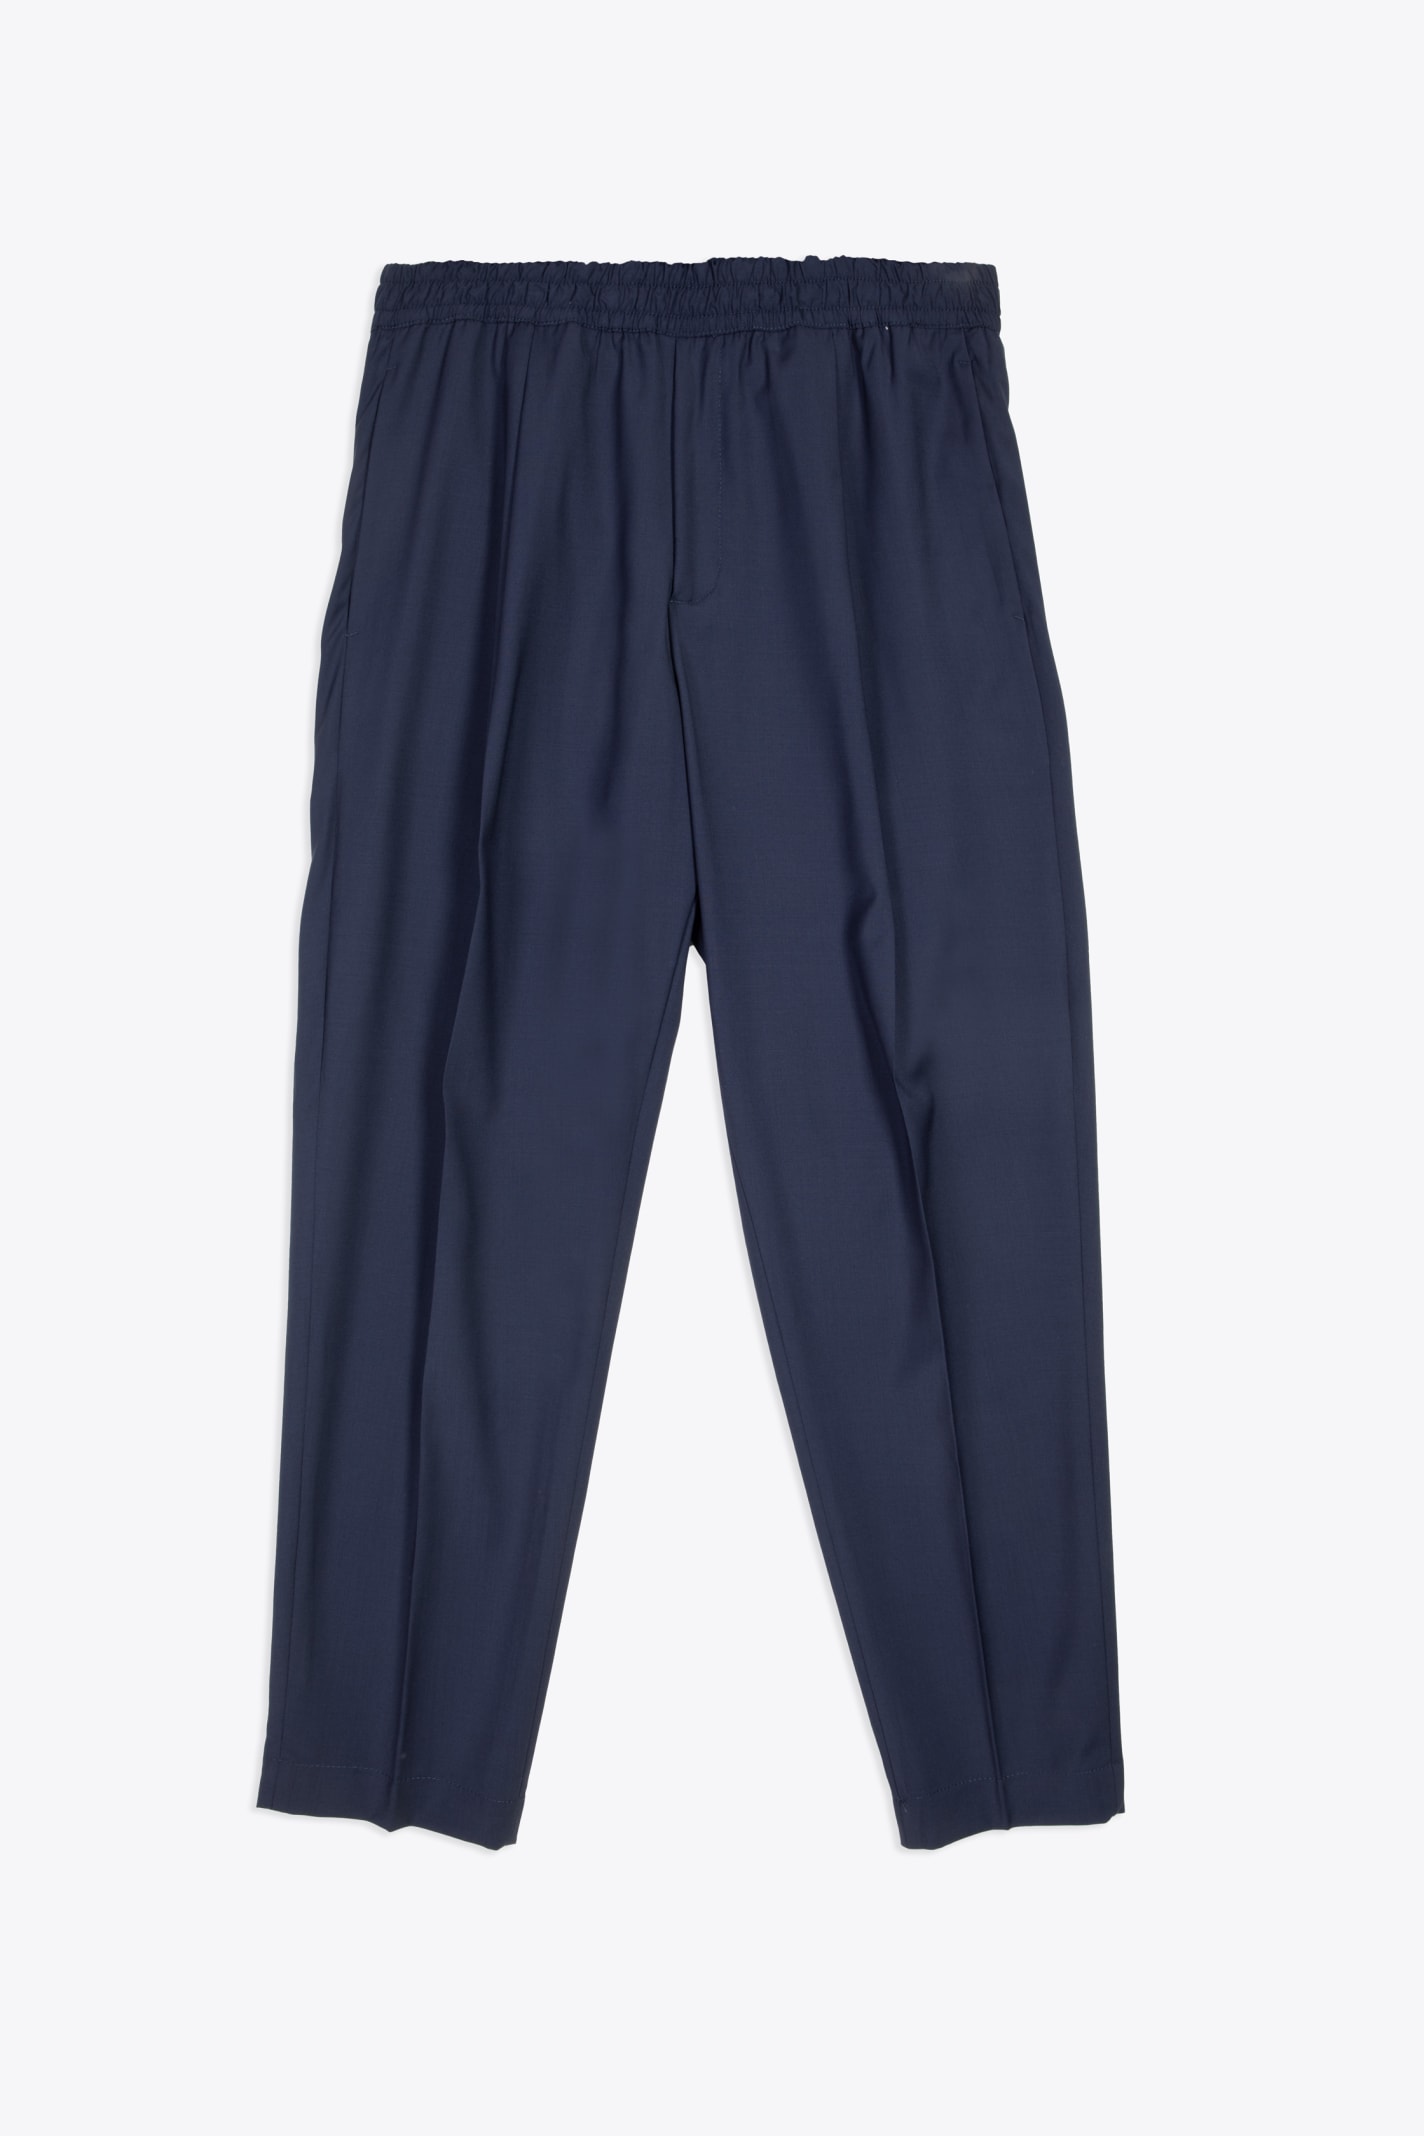 Pantalone Blue wool tailored pant with elastic waistband - Savoys